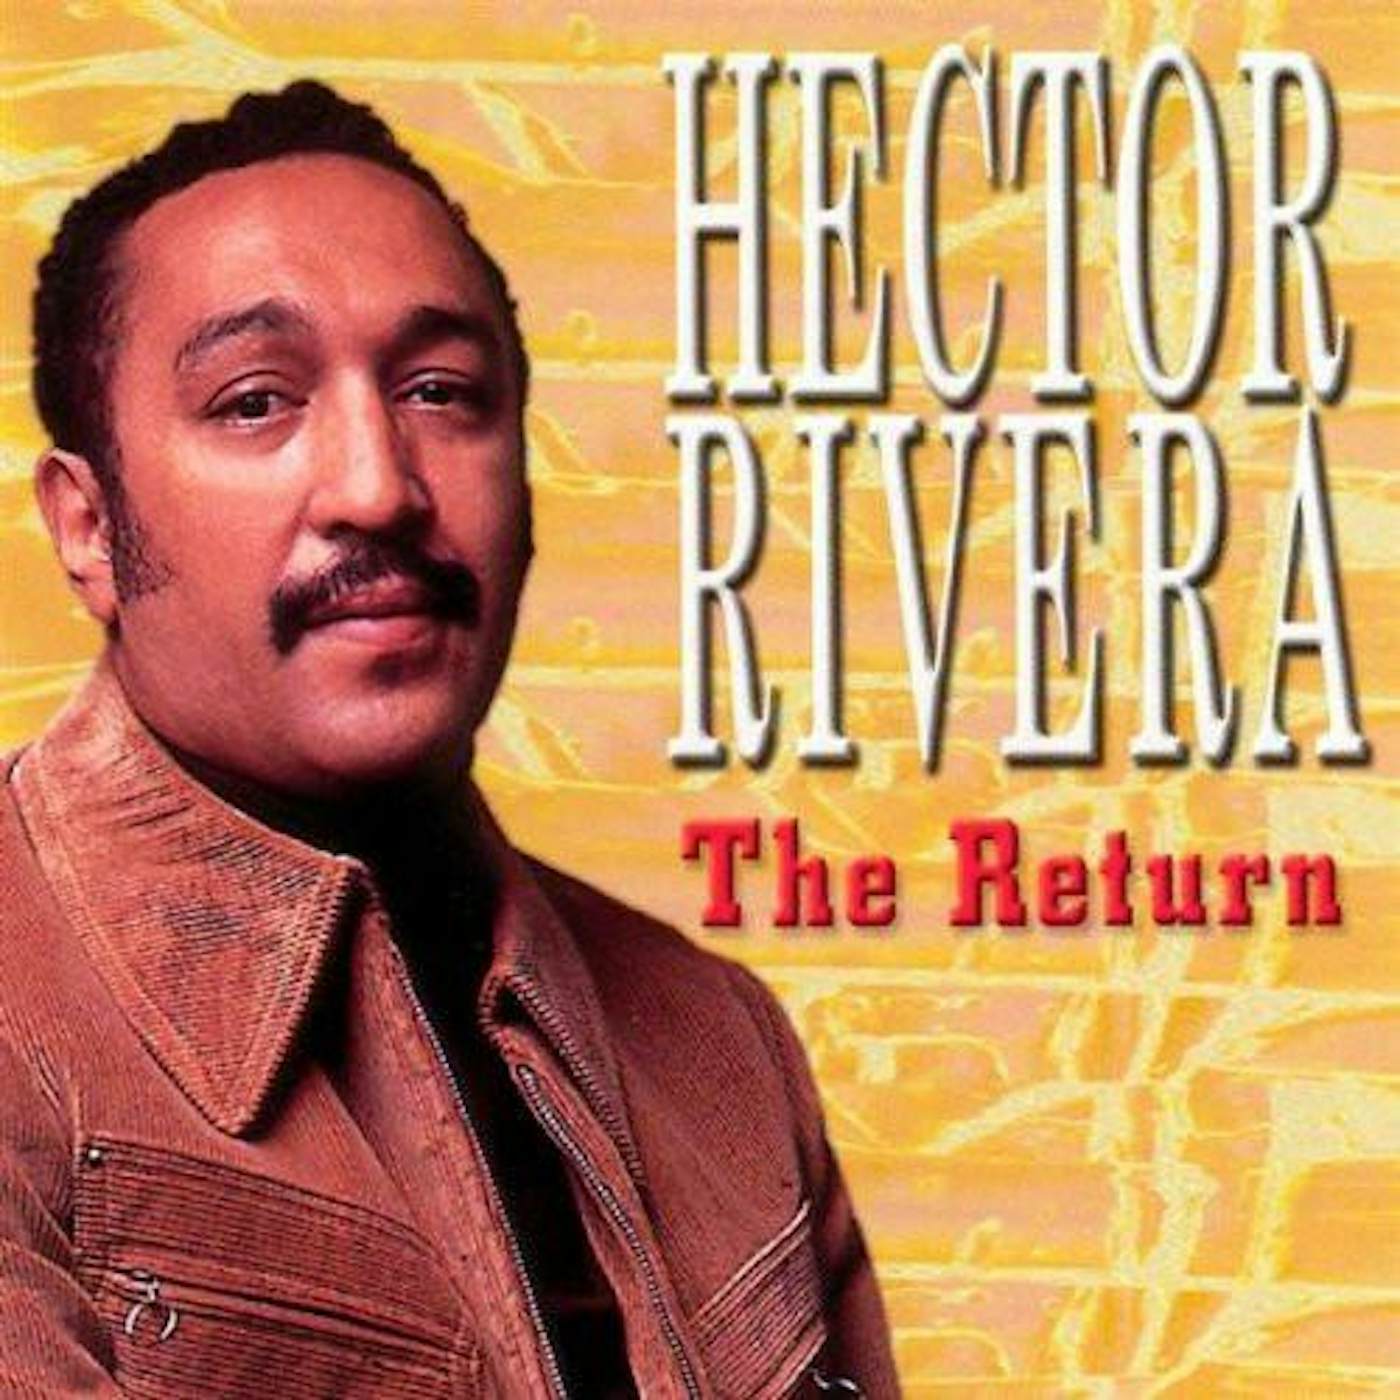 HECTOR RIVERA CD